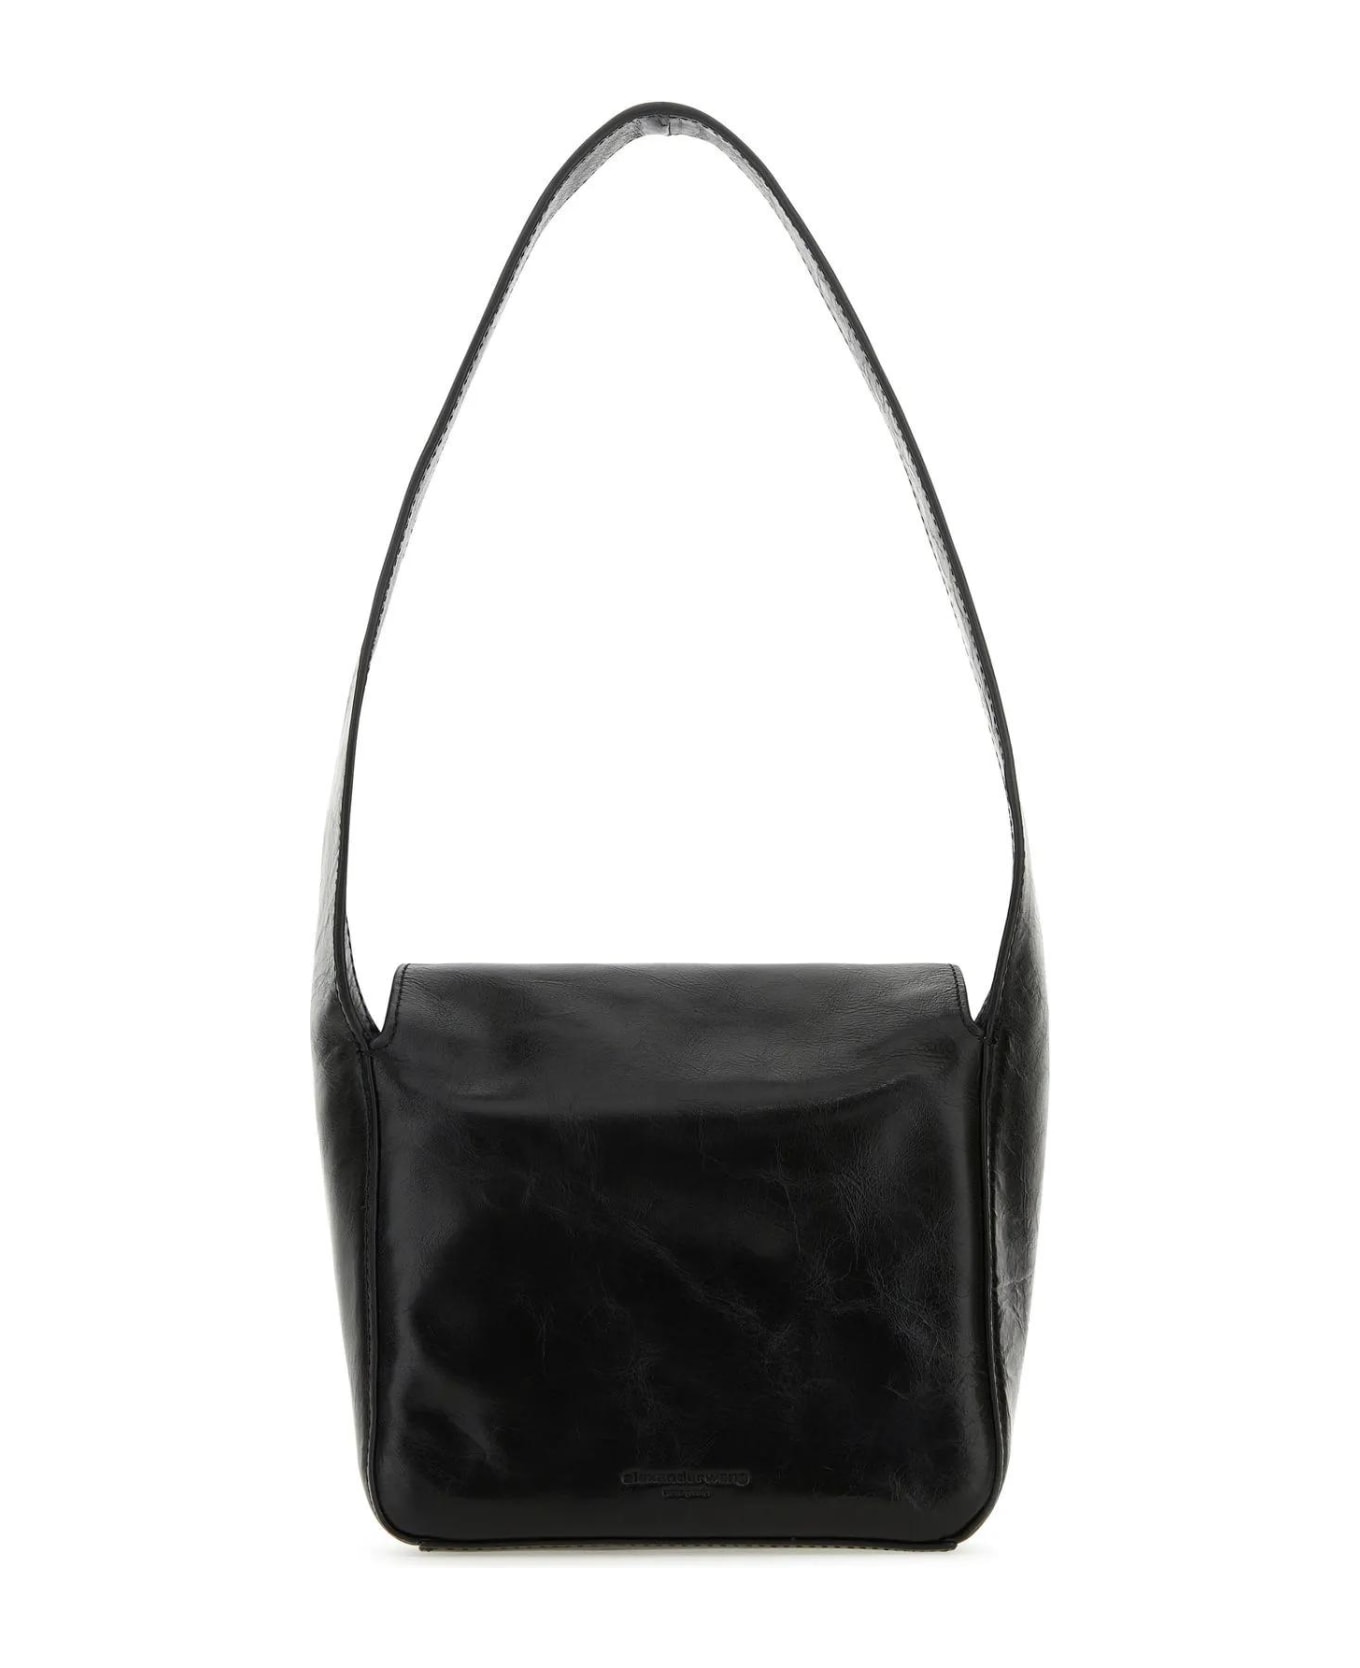 Alexander Wang Black Leather Small Hobo Dome Shoulder Bag - Black